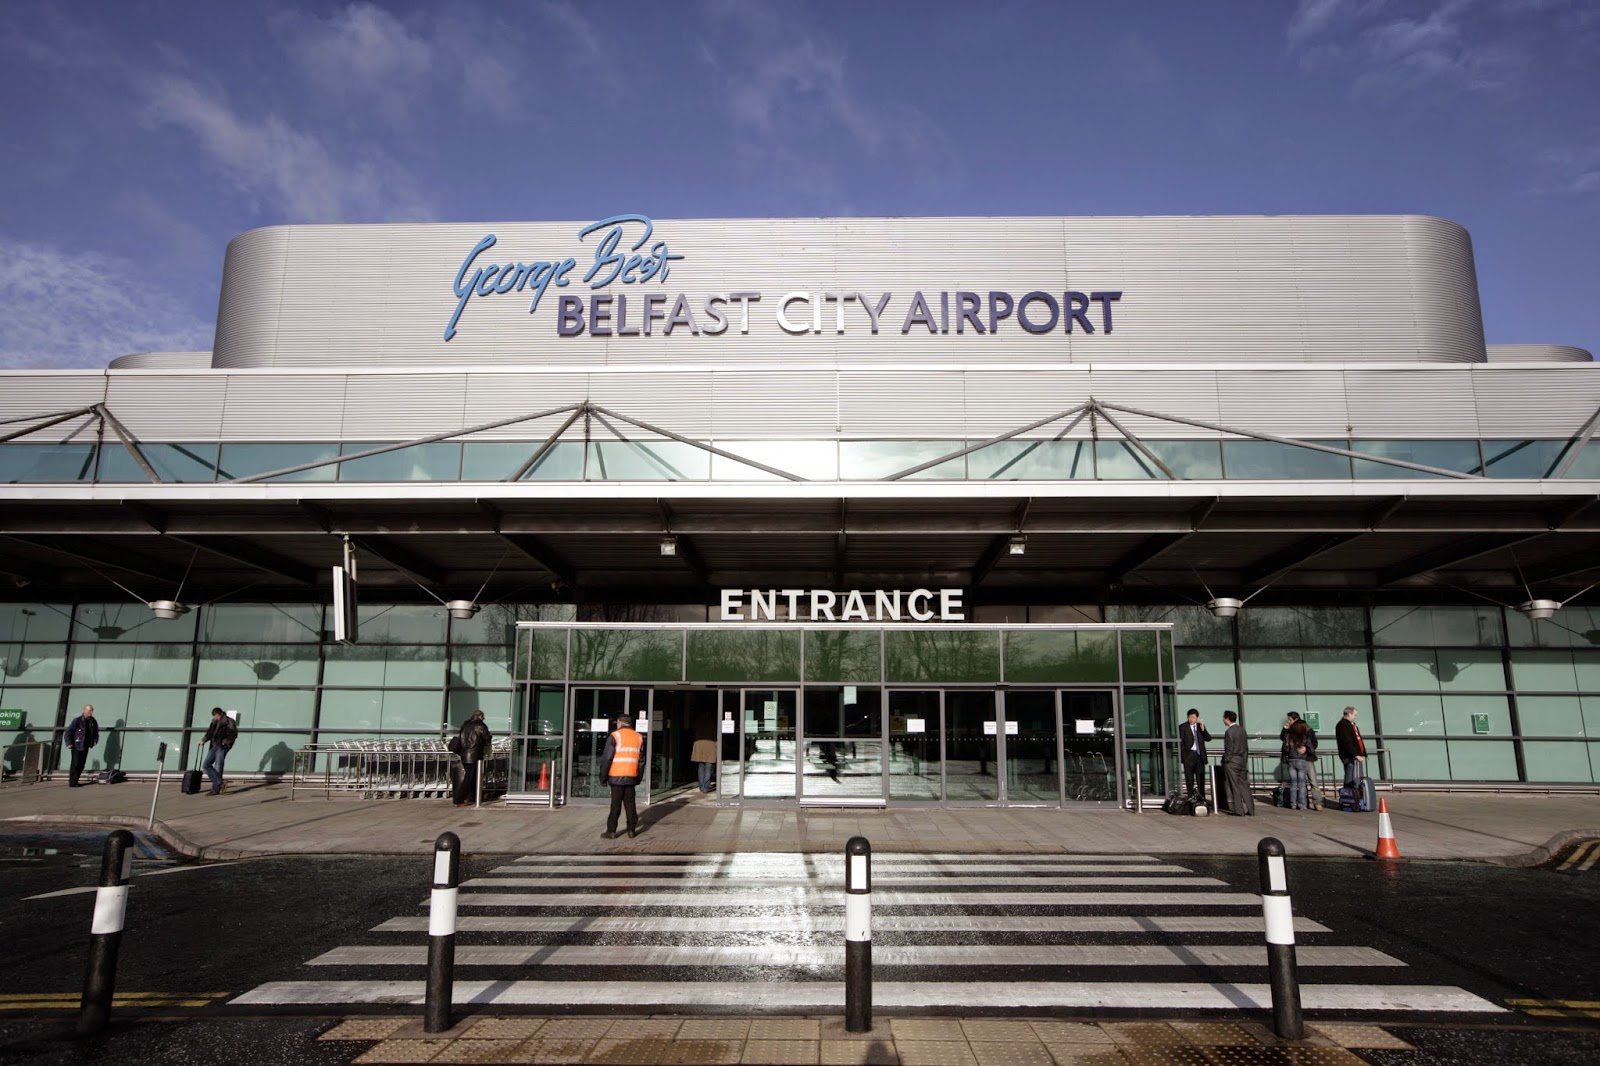 Whisky Belfast: Belfast City Airport - Duty Free